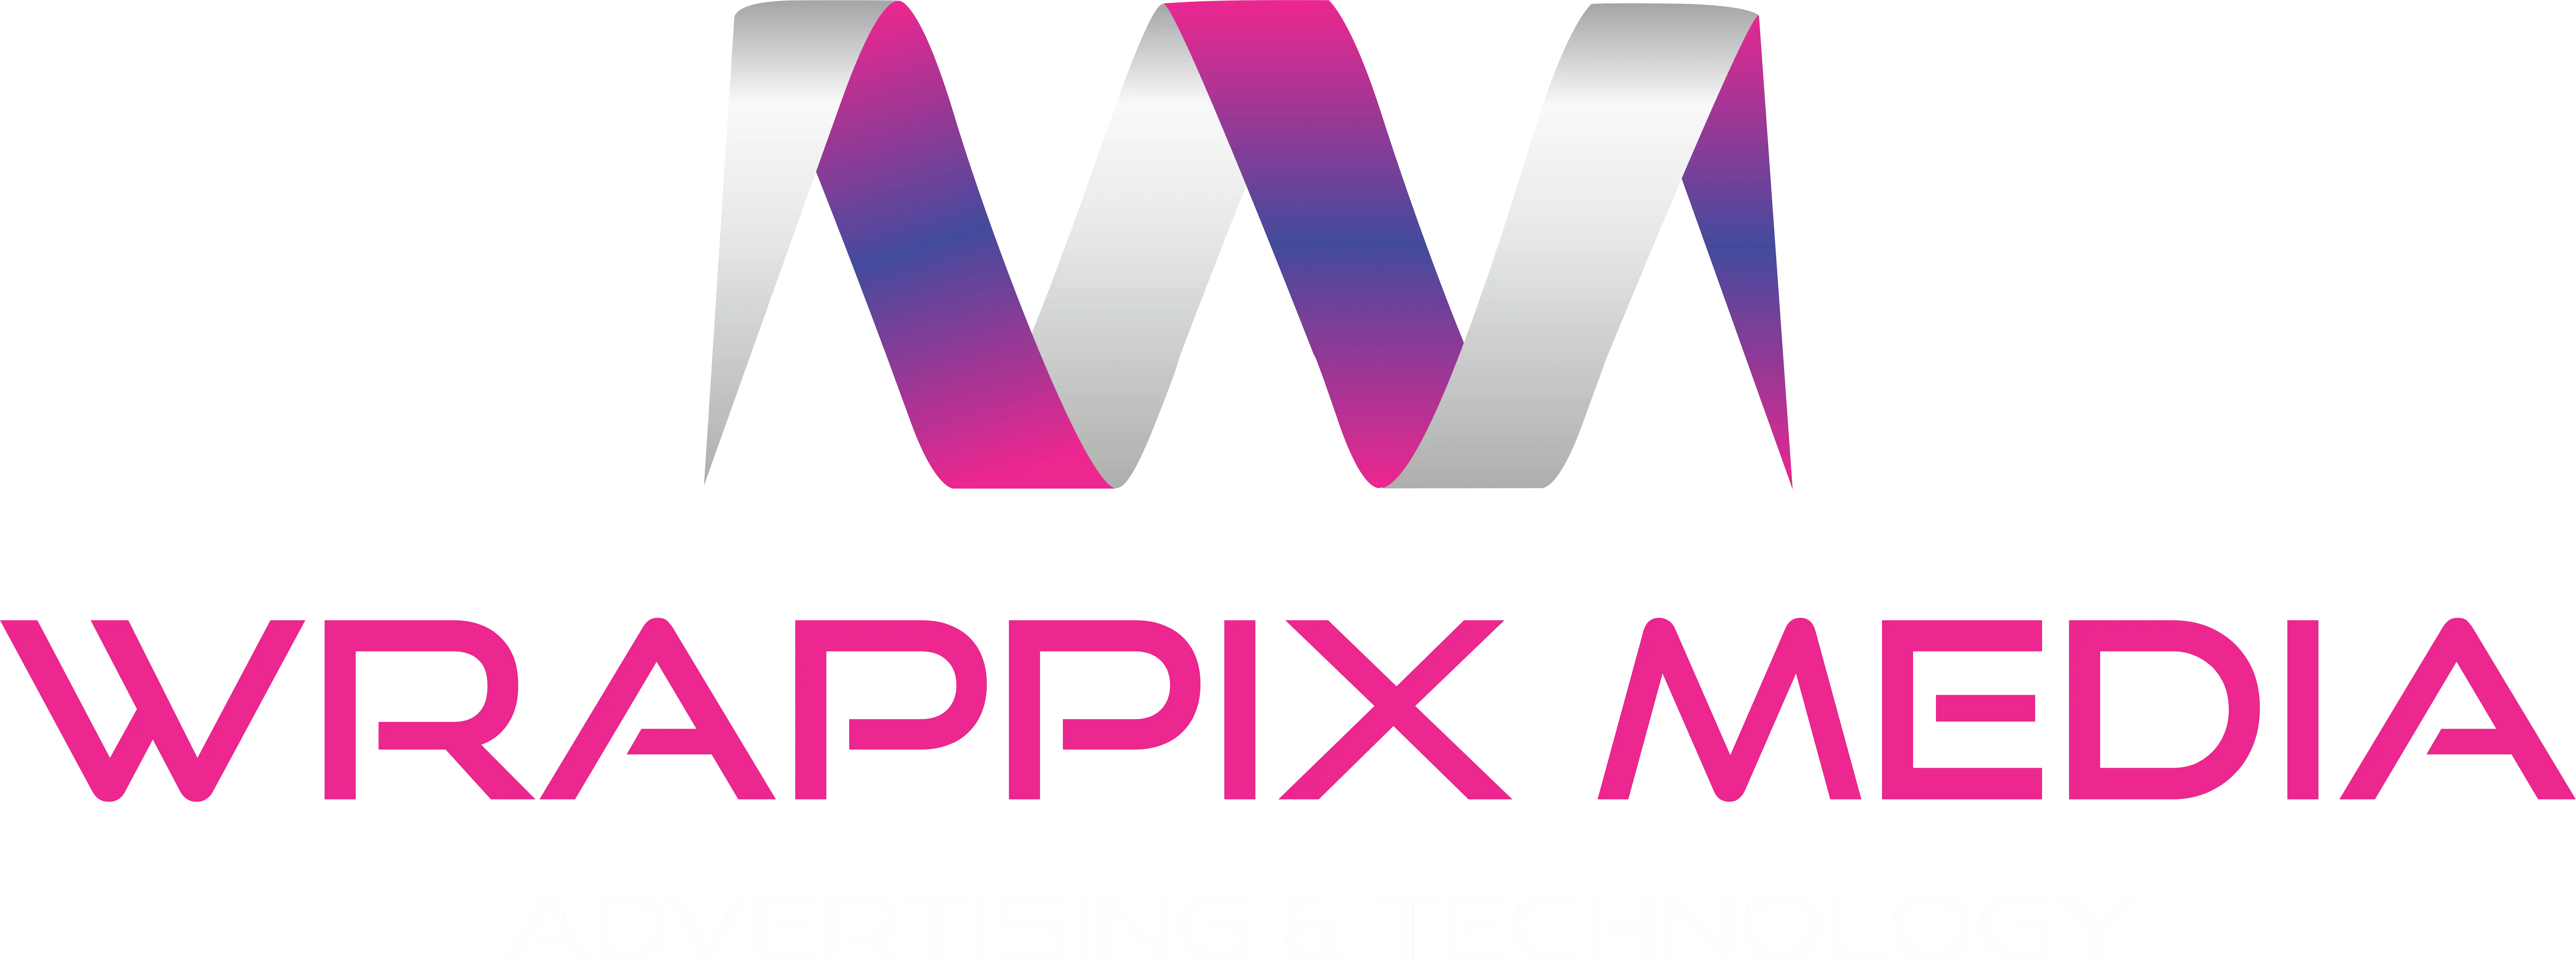 Wrappix Media logo